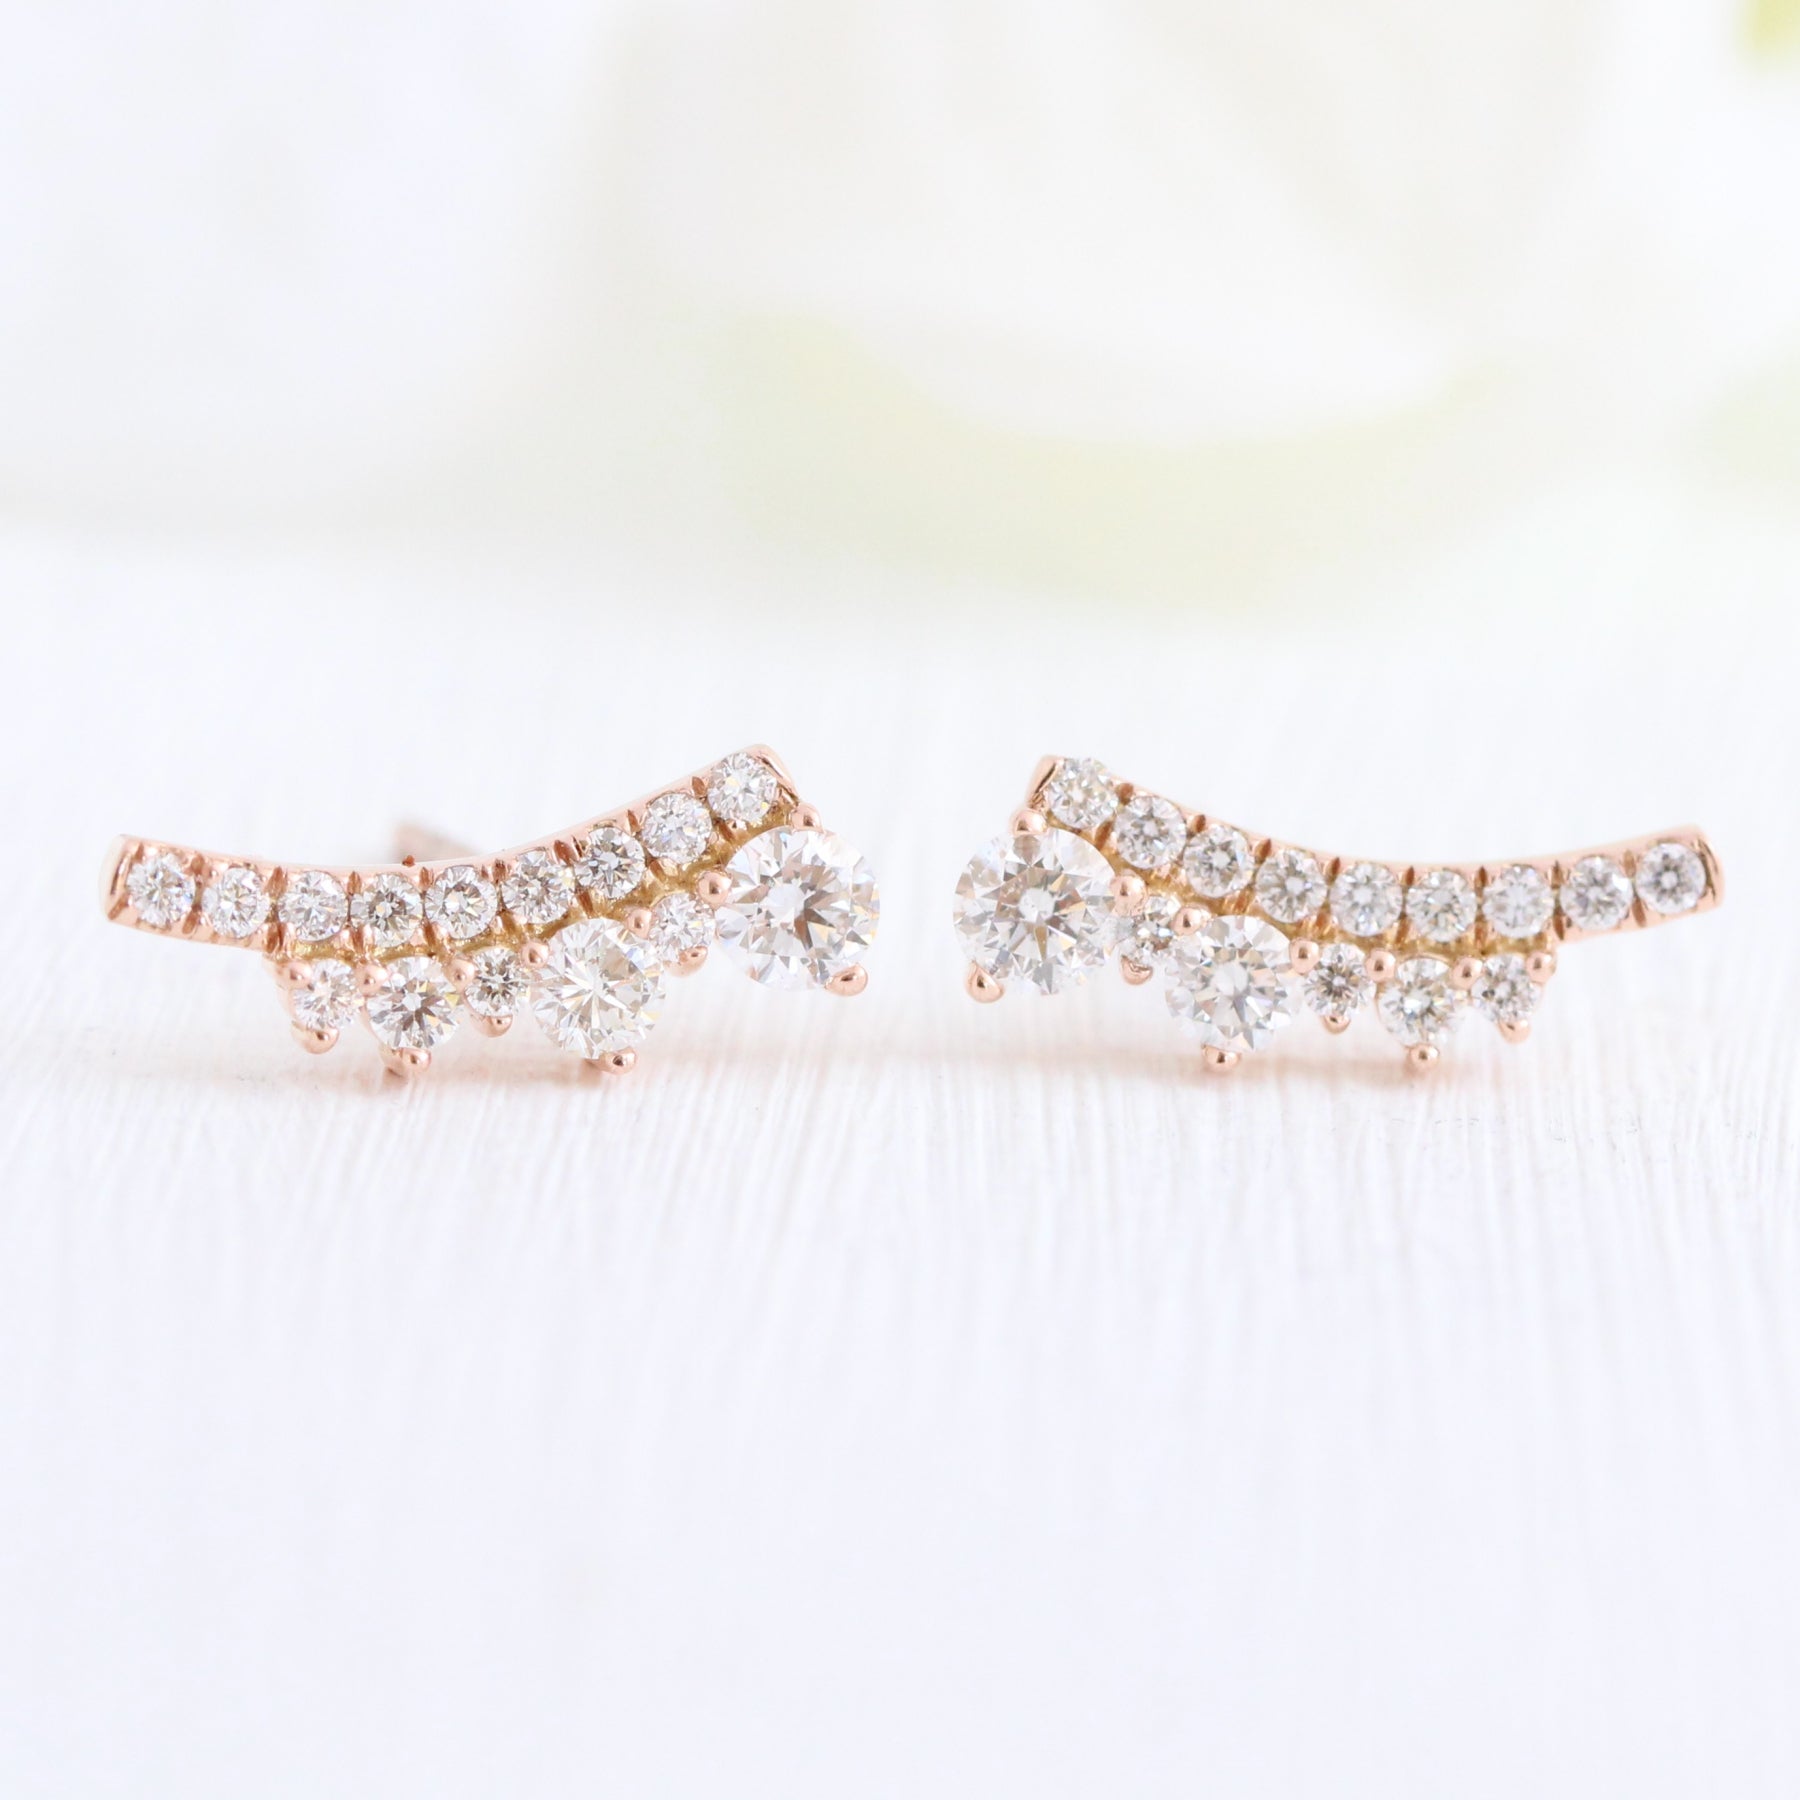 Tiara large diamond earrings in rose gold studs la more design jewelry